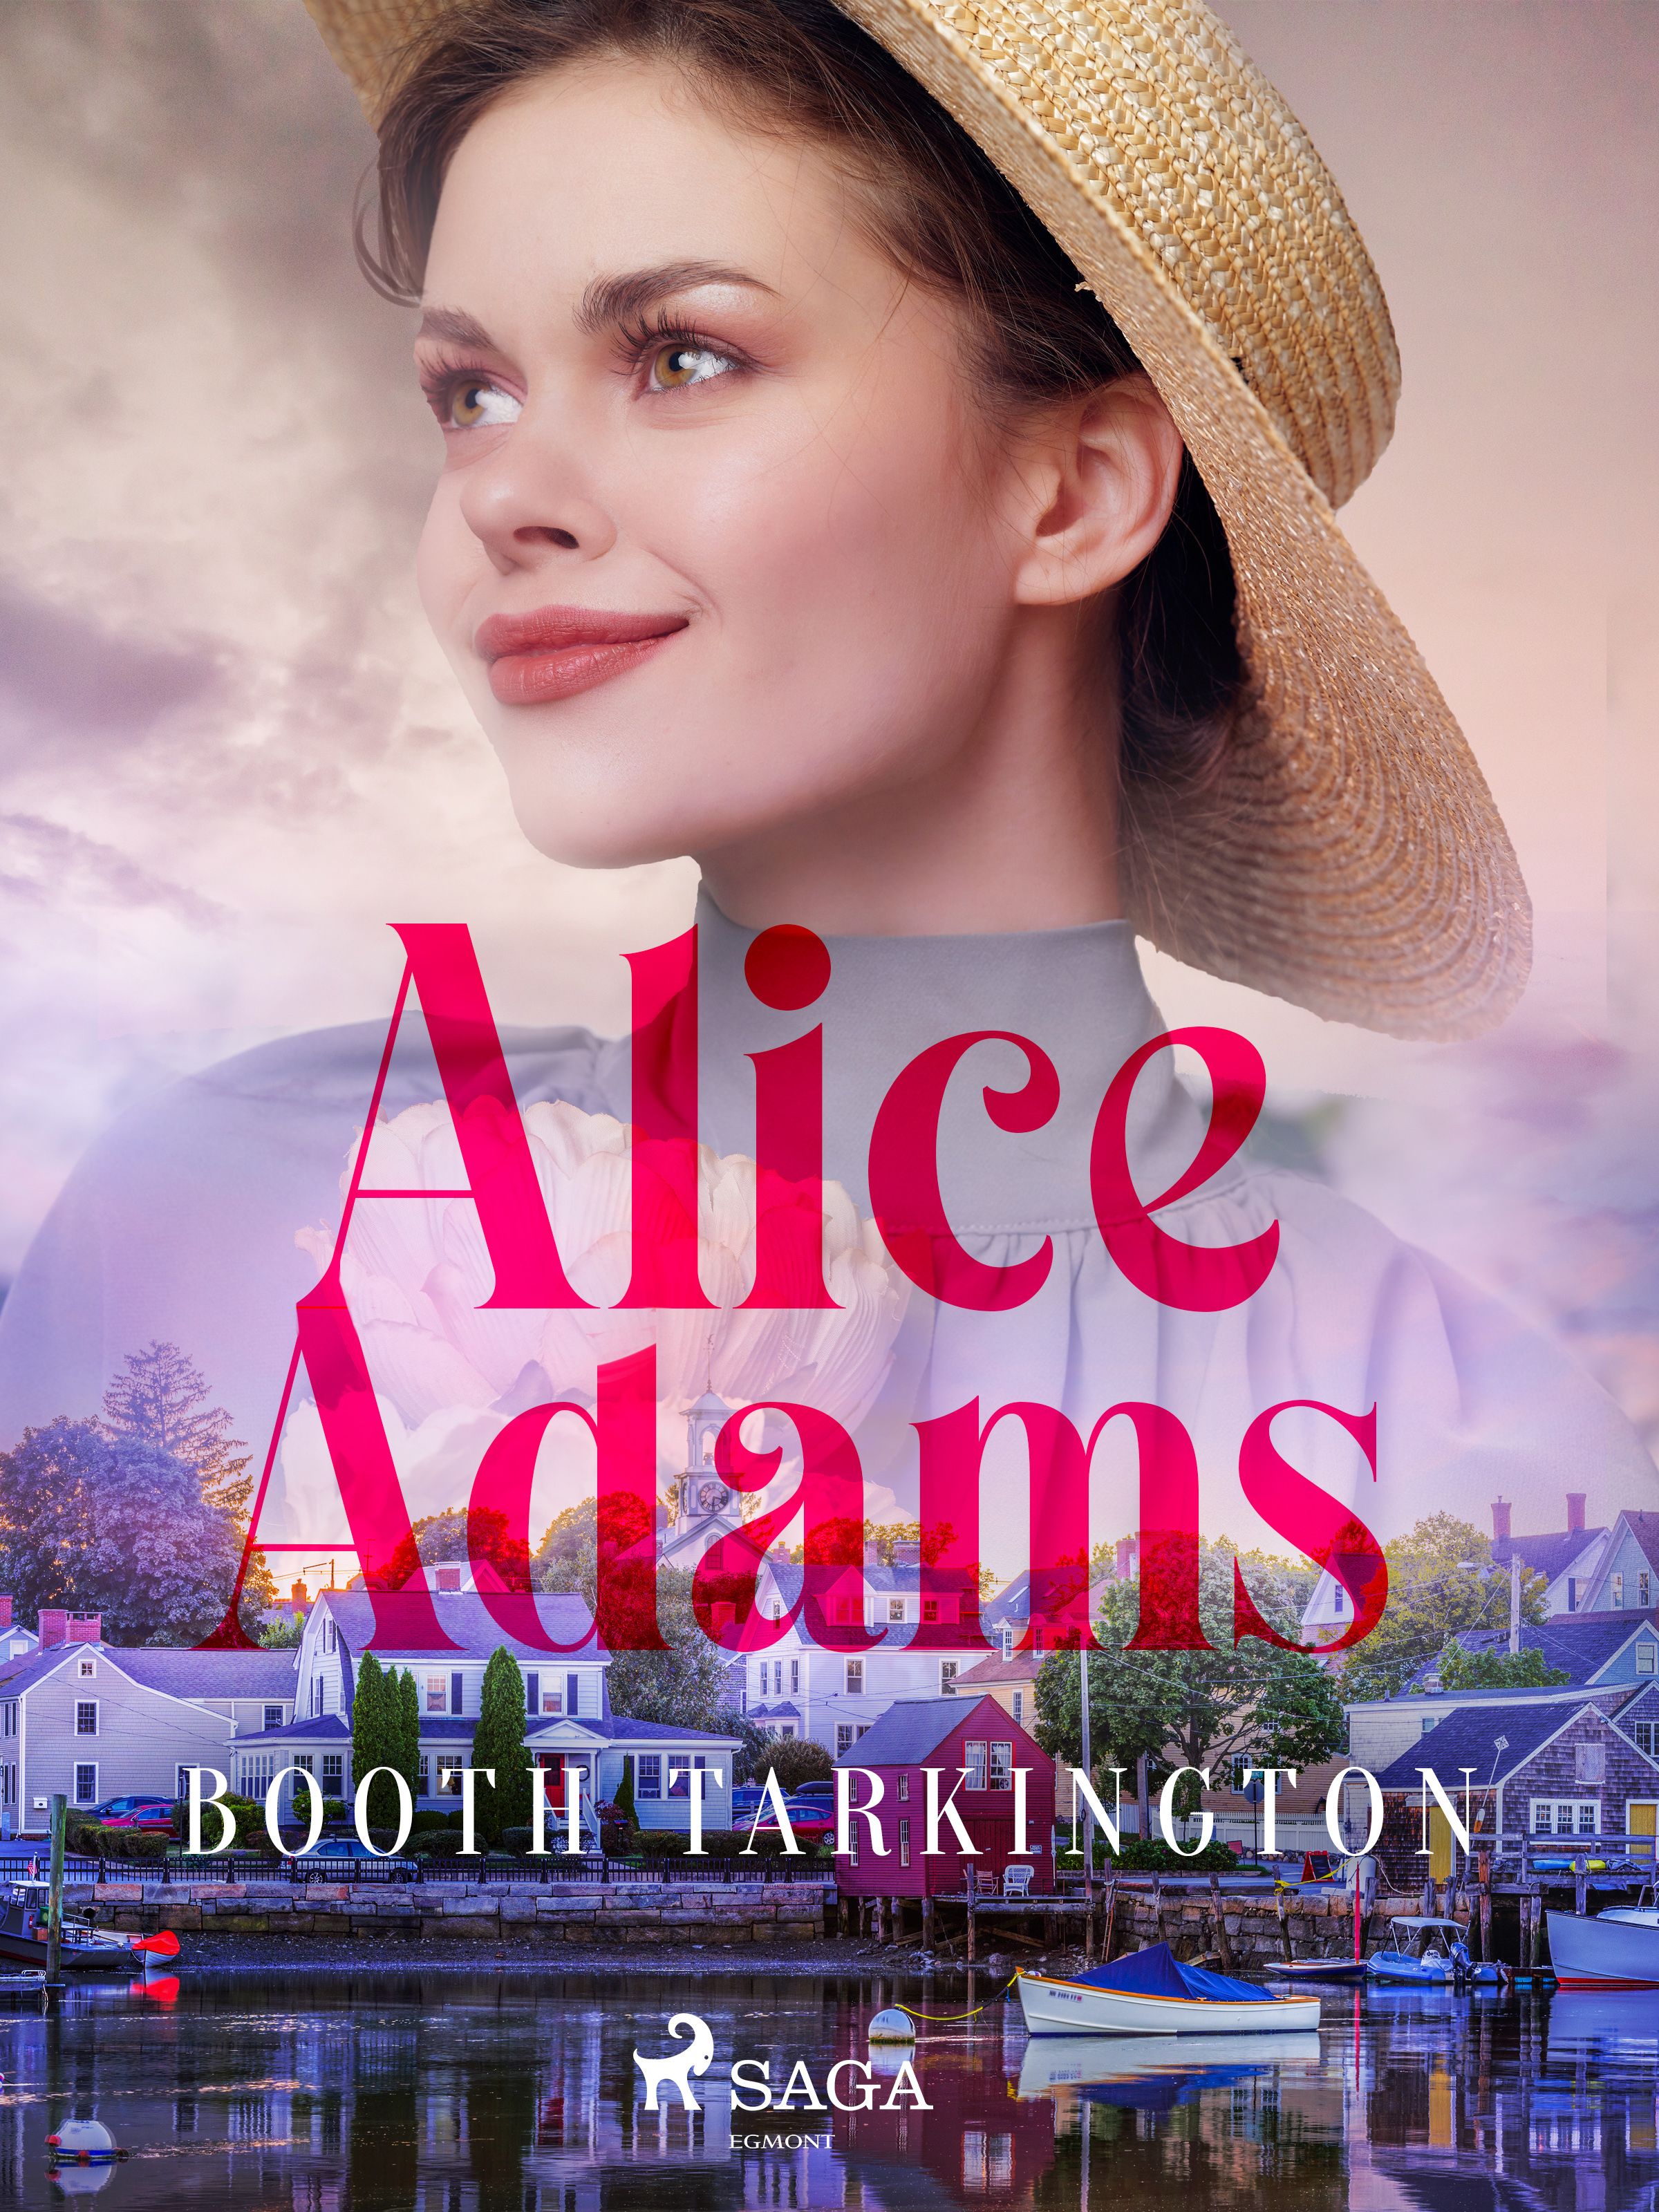 Alice Adams, eBook by Booth Tarkington